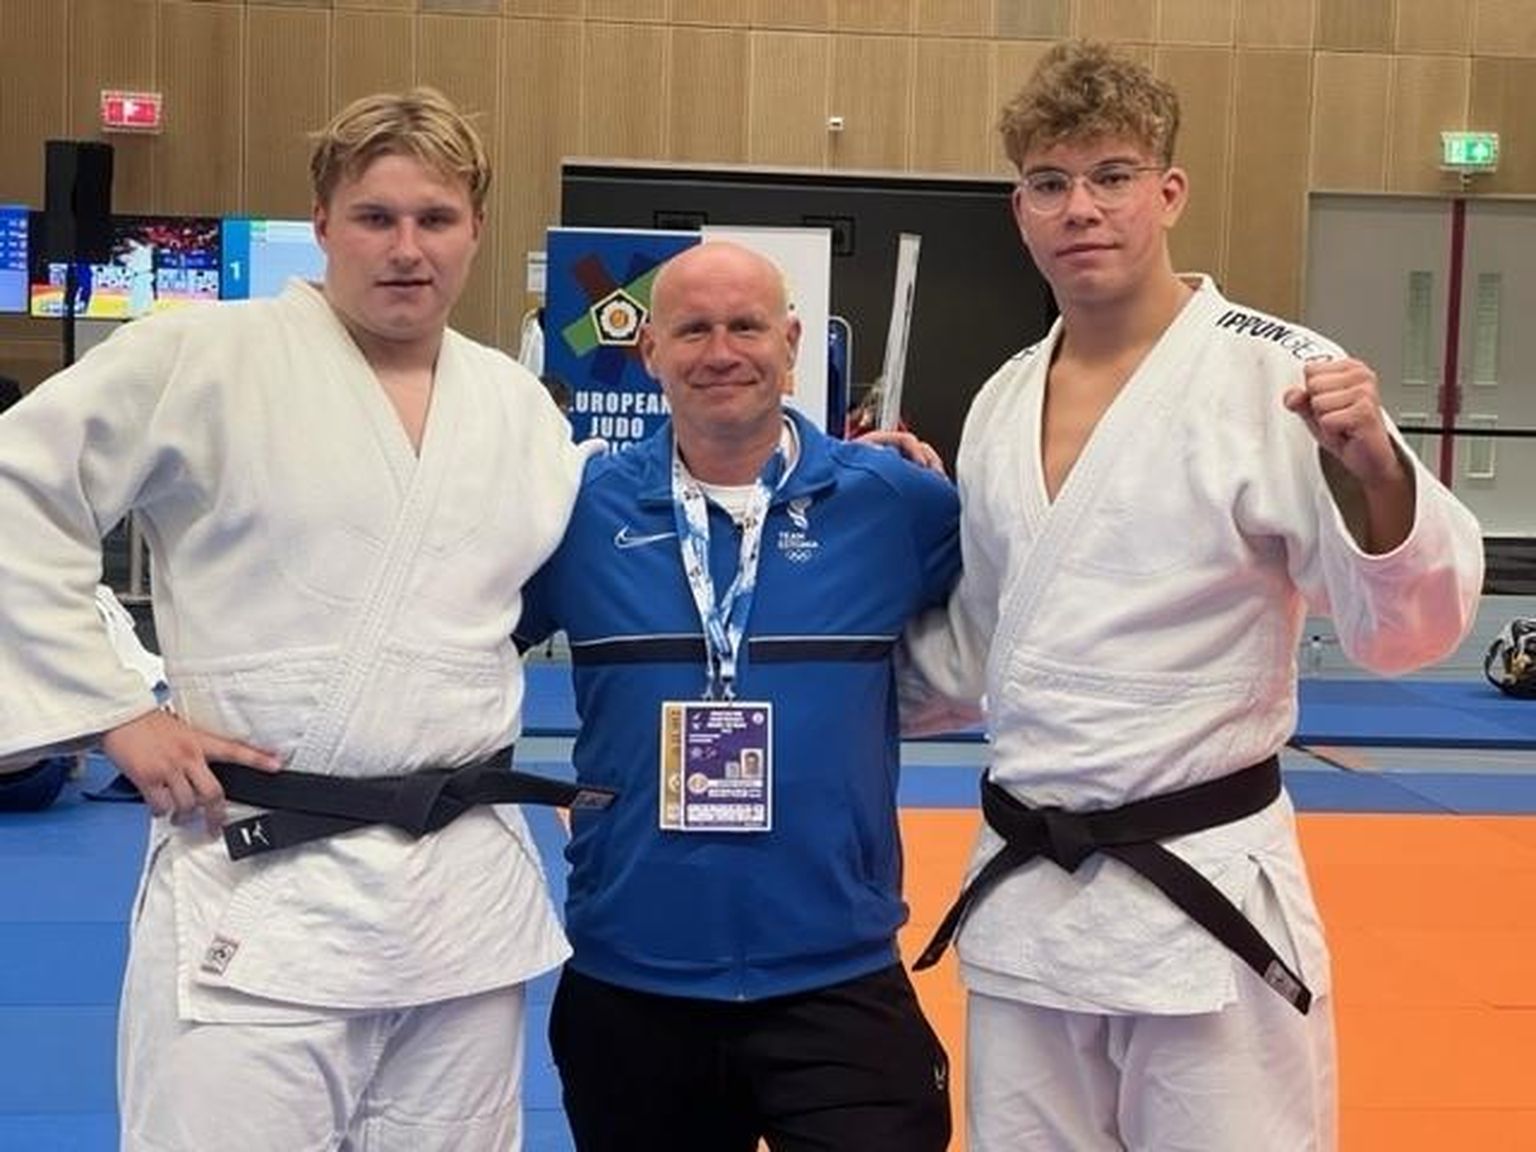 Olümpiko judoklubi kasvandik Kabriel Kirna (vasakul).